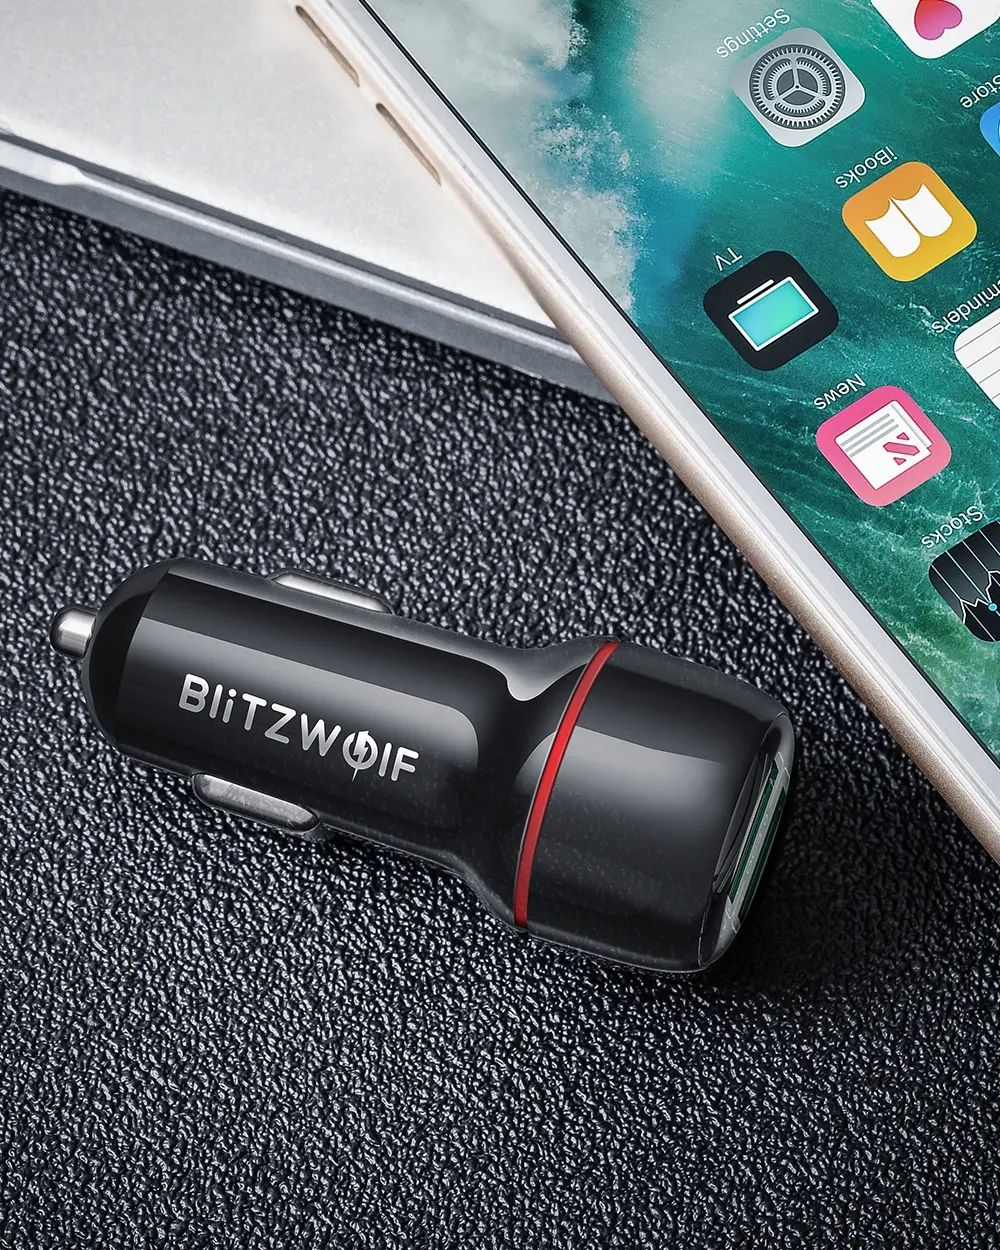 BlitzWolfreg-BW-SD5-18W-Dual-Port-QC30-Mini-Car-USB-Charger-With-BW-TC14-3A-USB-Type-C-Cable-Fast-Ch-1751234